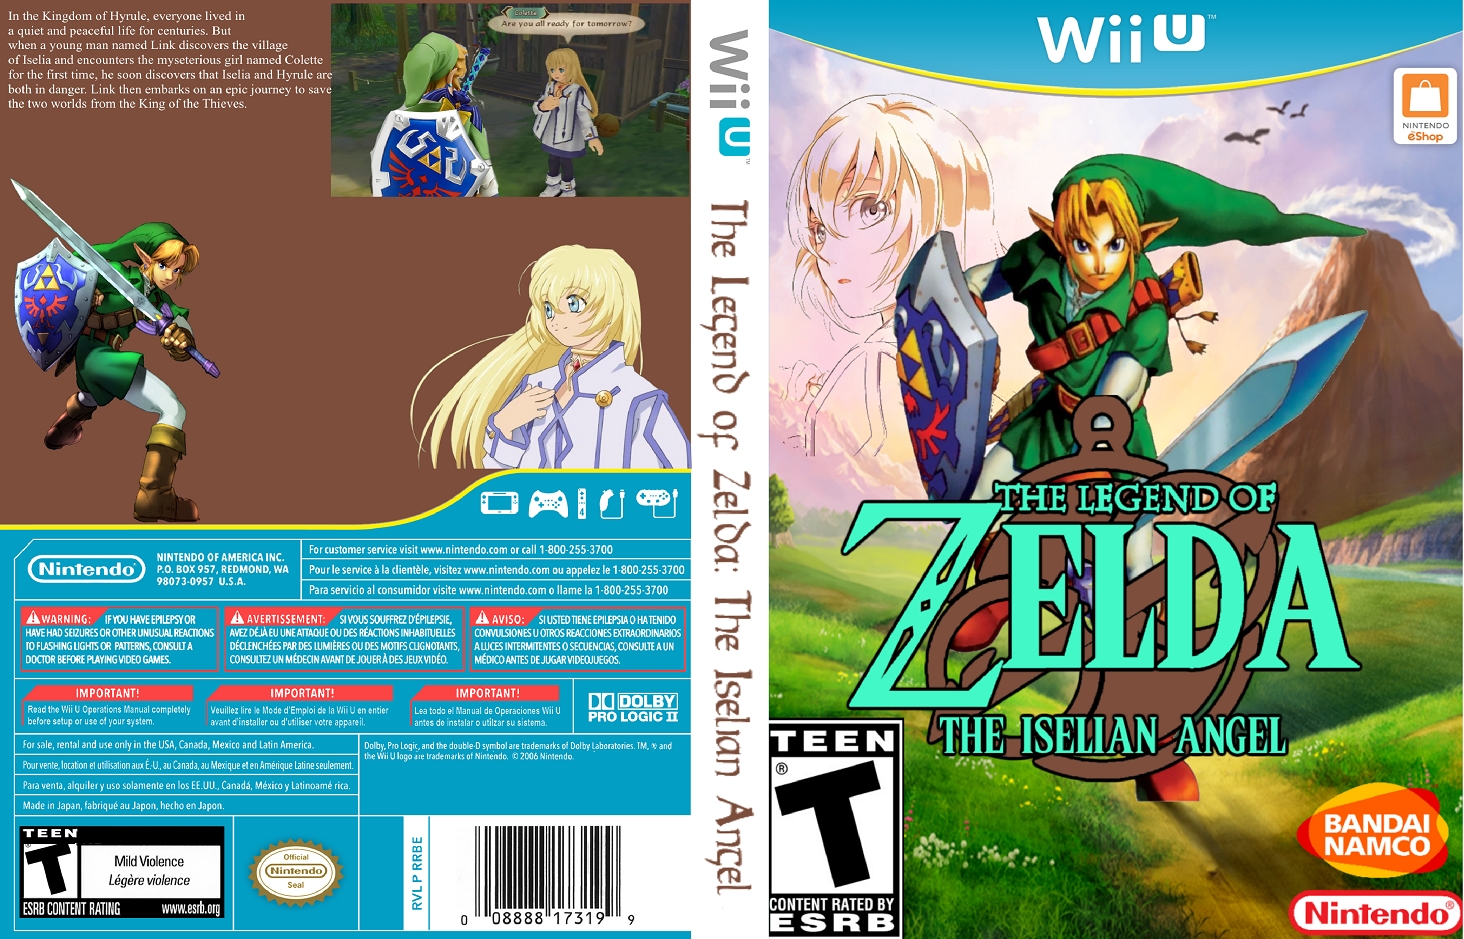 The Legend of Zelda: The Iselian Angel box cover